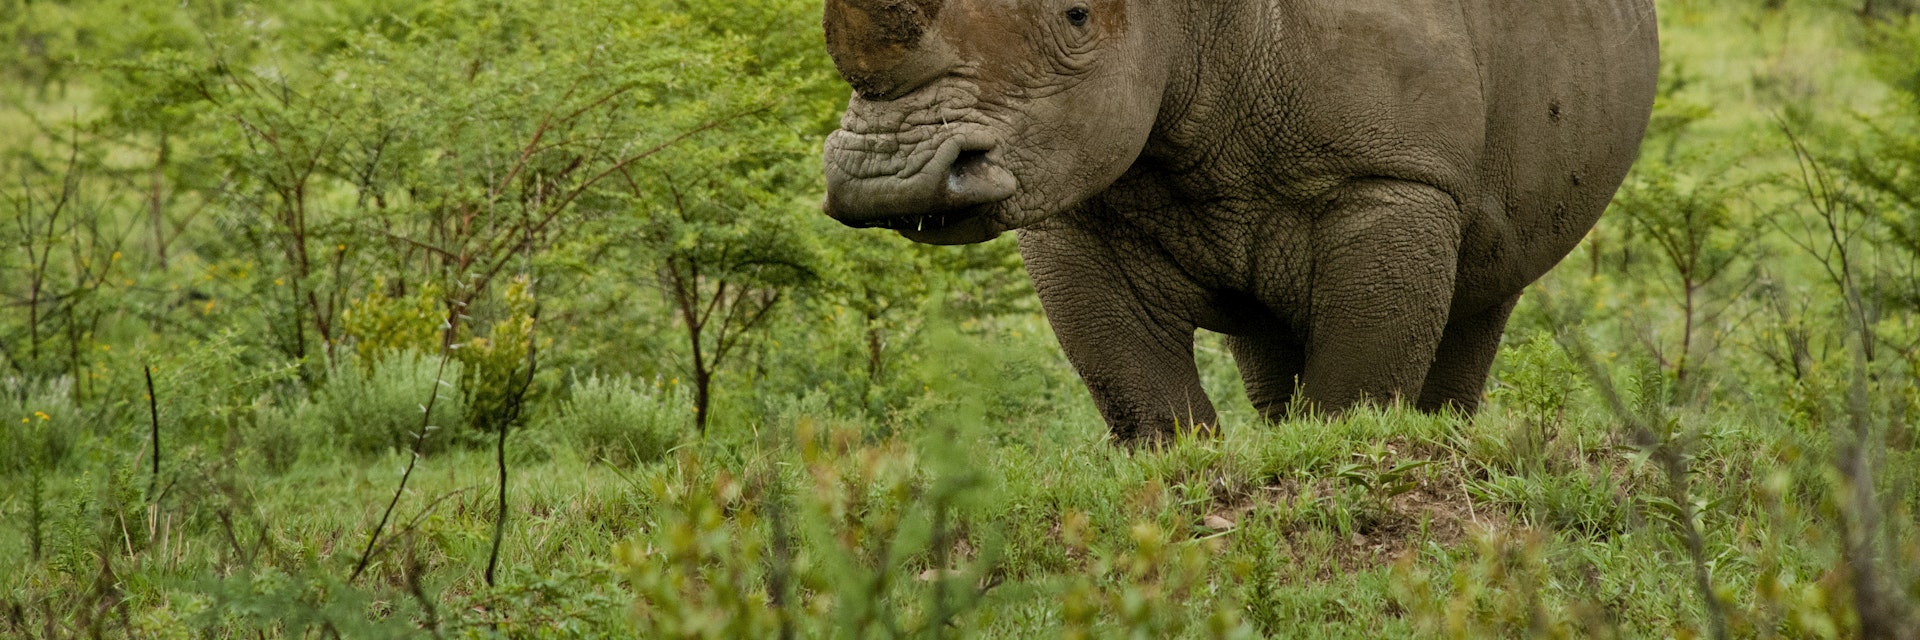 White rhino in a green field at Pilanesberg National Park.